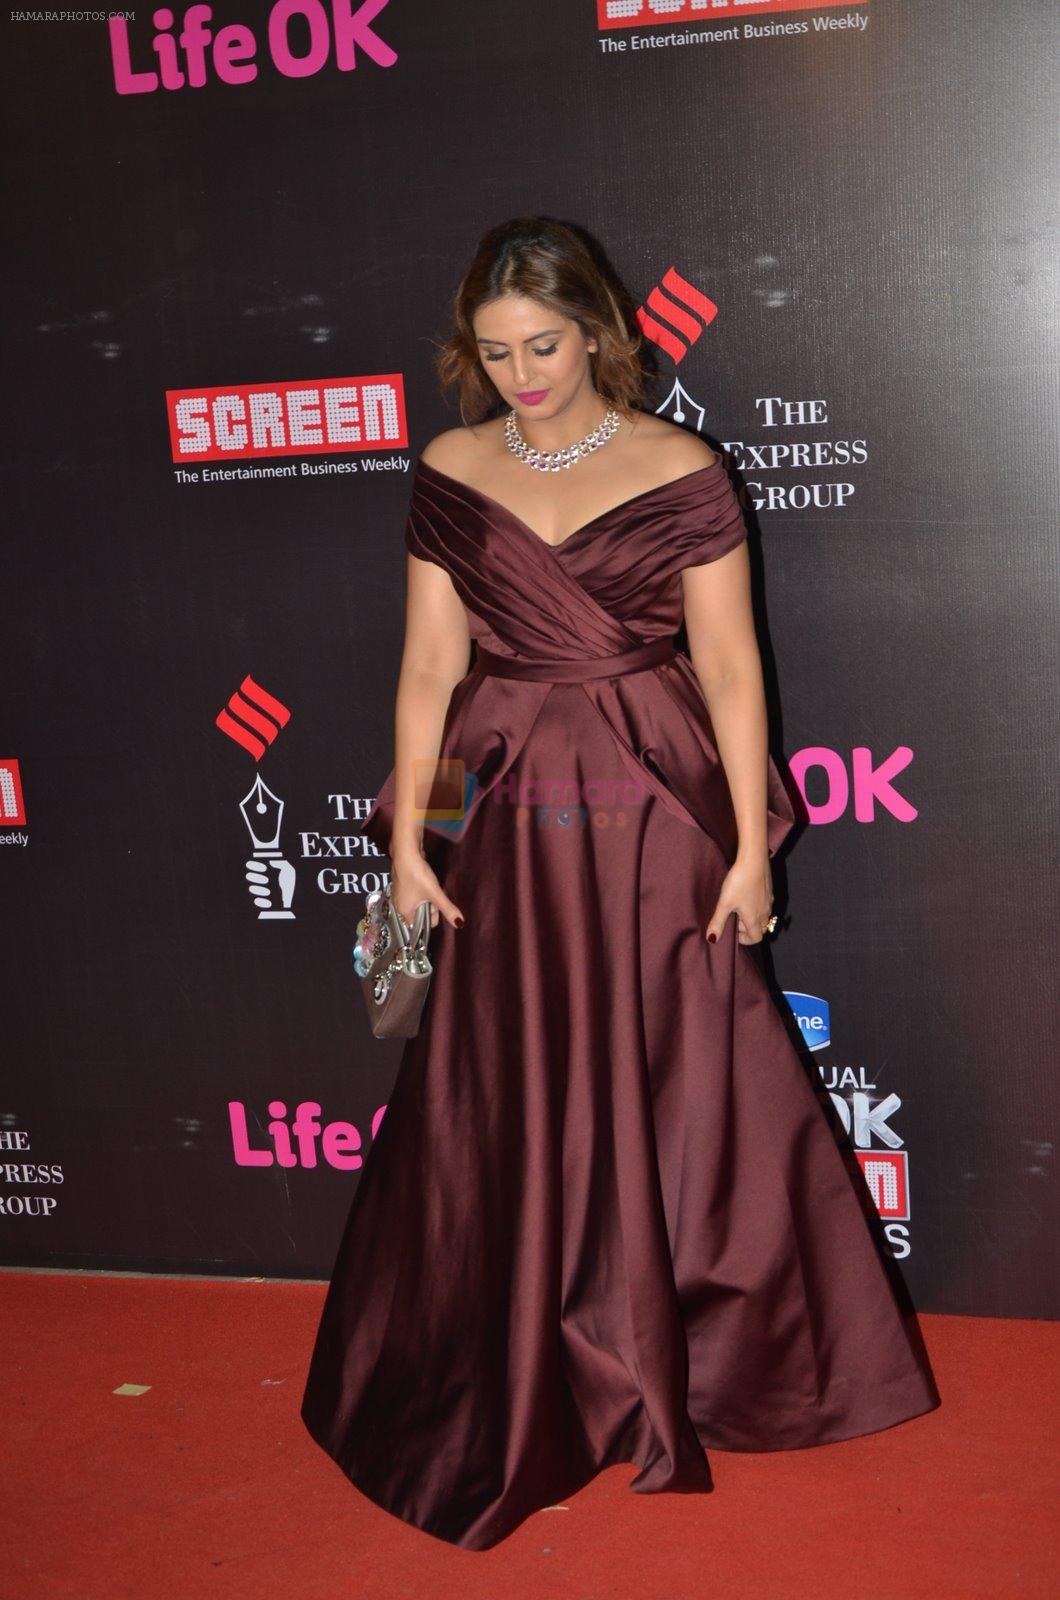 Huma Qureshi at Life Ok Screen Awards red carpet in Mumbai on 14th Jan 2015